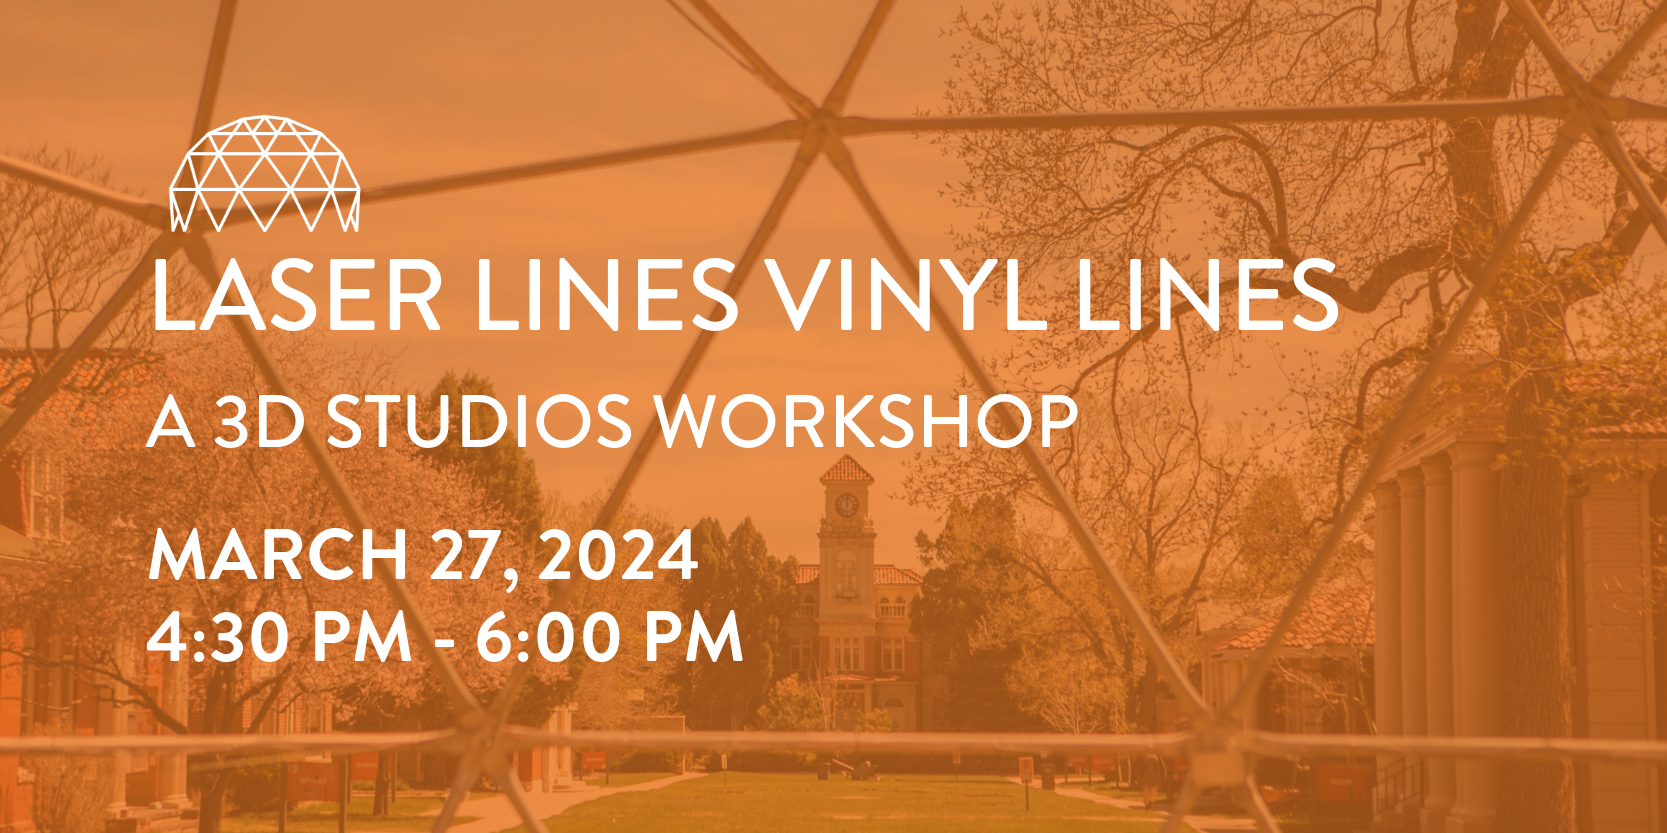 Laser Lines Vinyl Lines, A 3D Studios Workshop